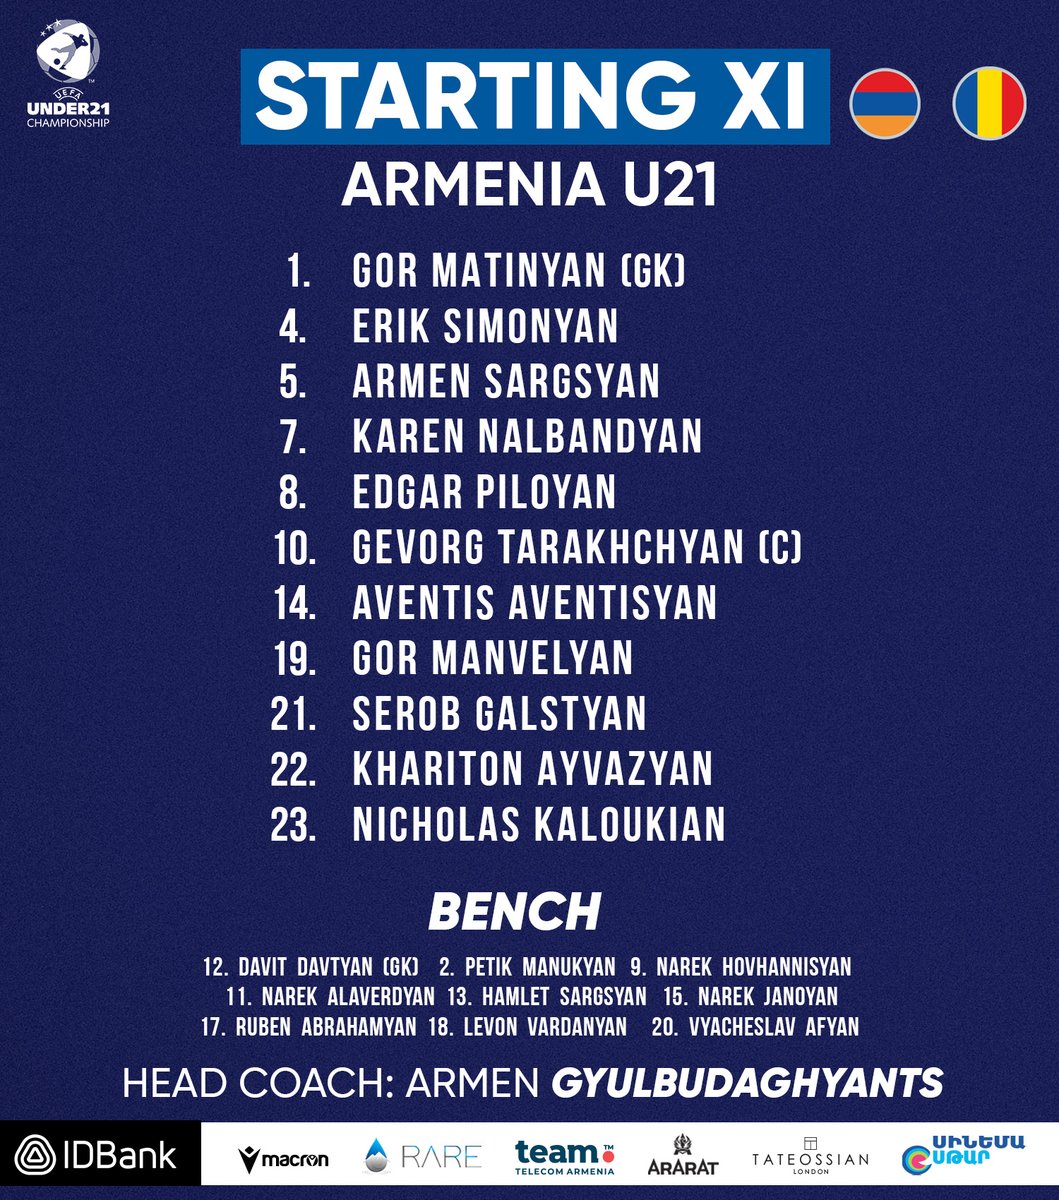 It's TIME for U21 STARTING XI 🆚 Romania #GoArmenia